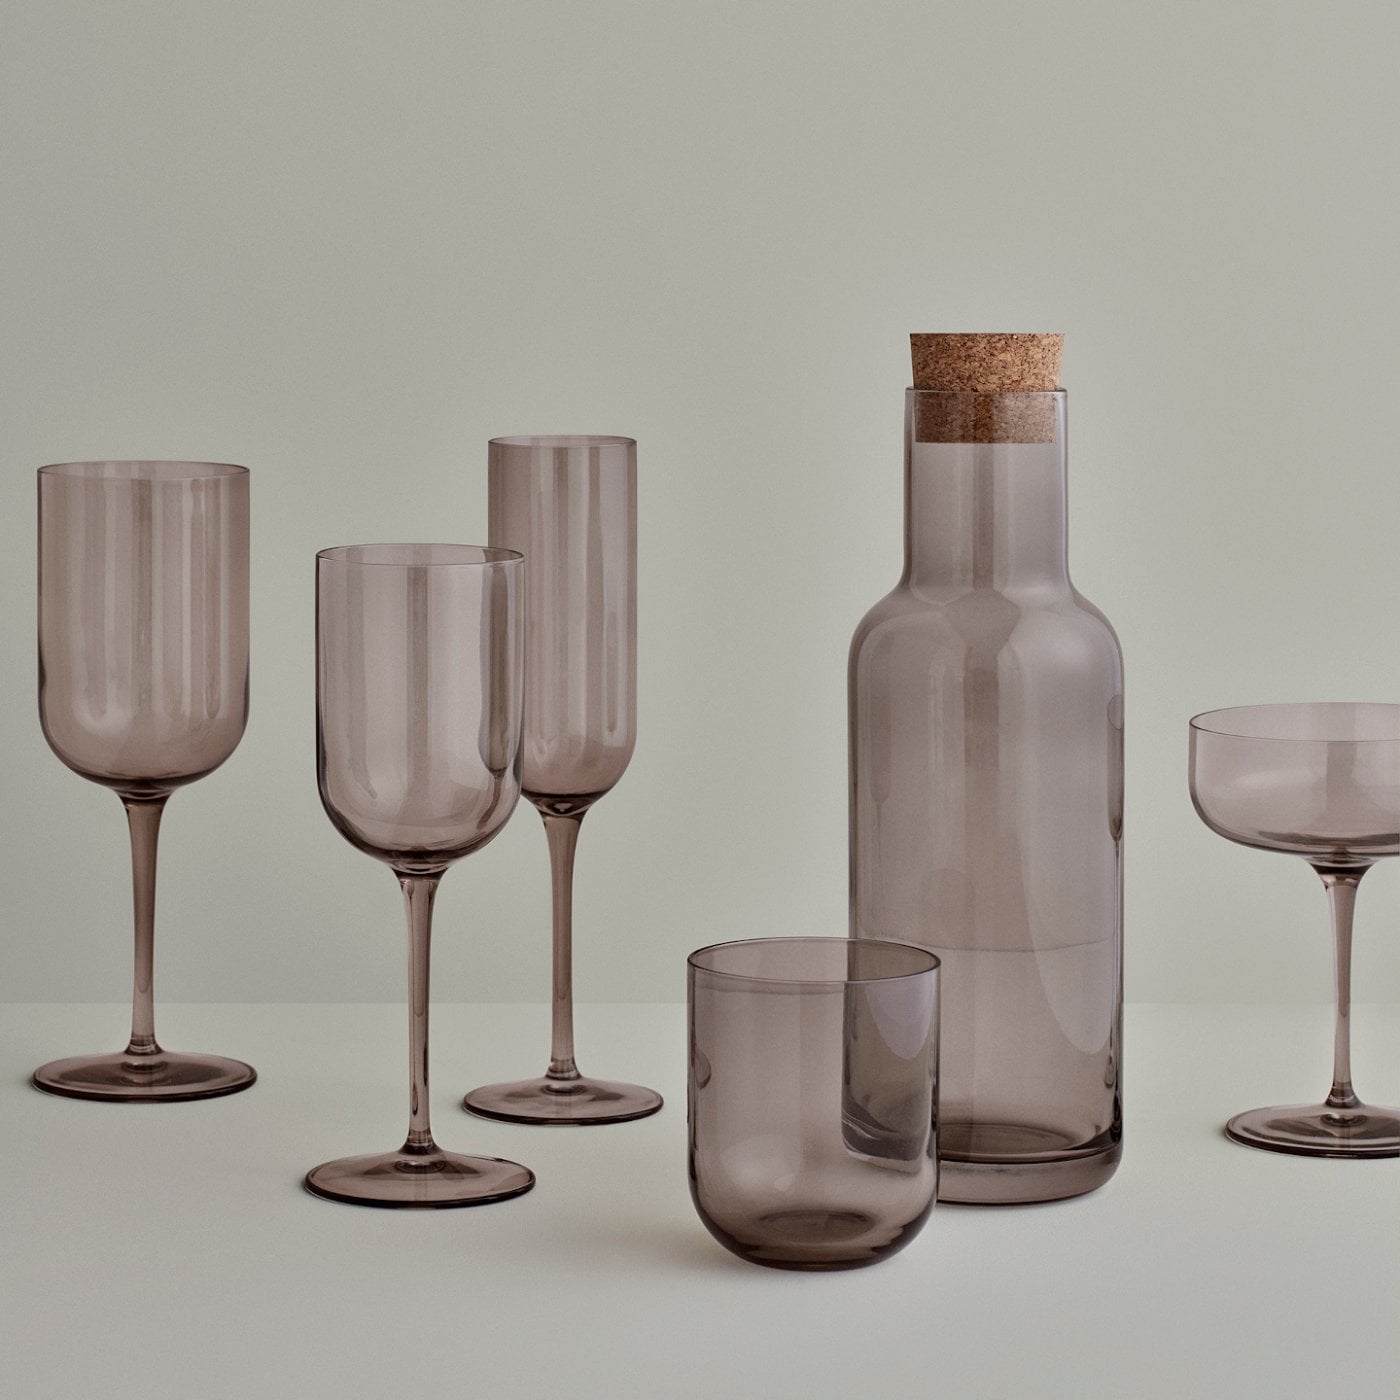 Blomus White Wine Glasses Tinted in Golden-Beige Nomad Fuum Set of 4